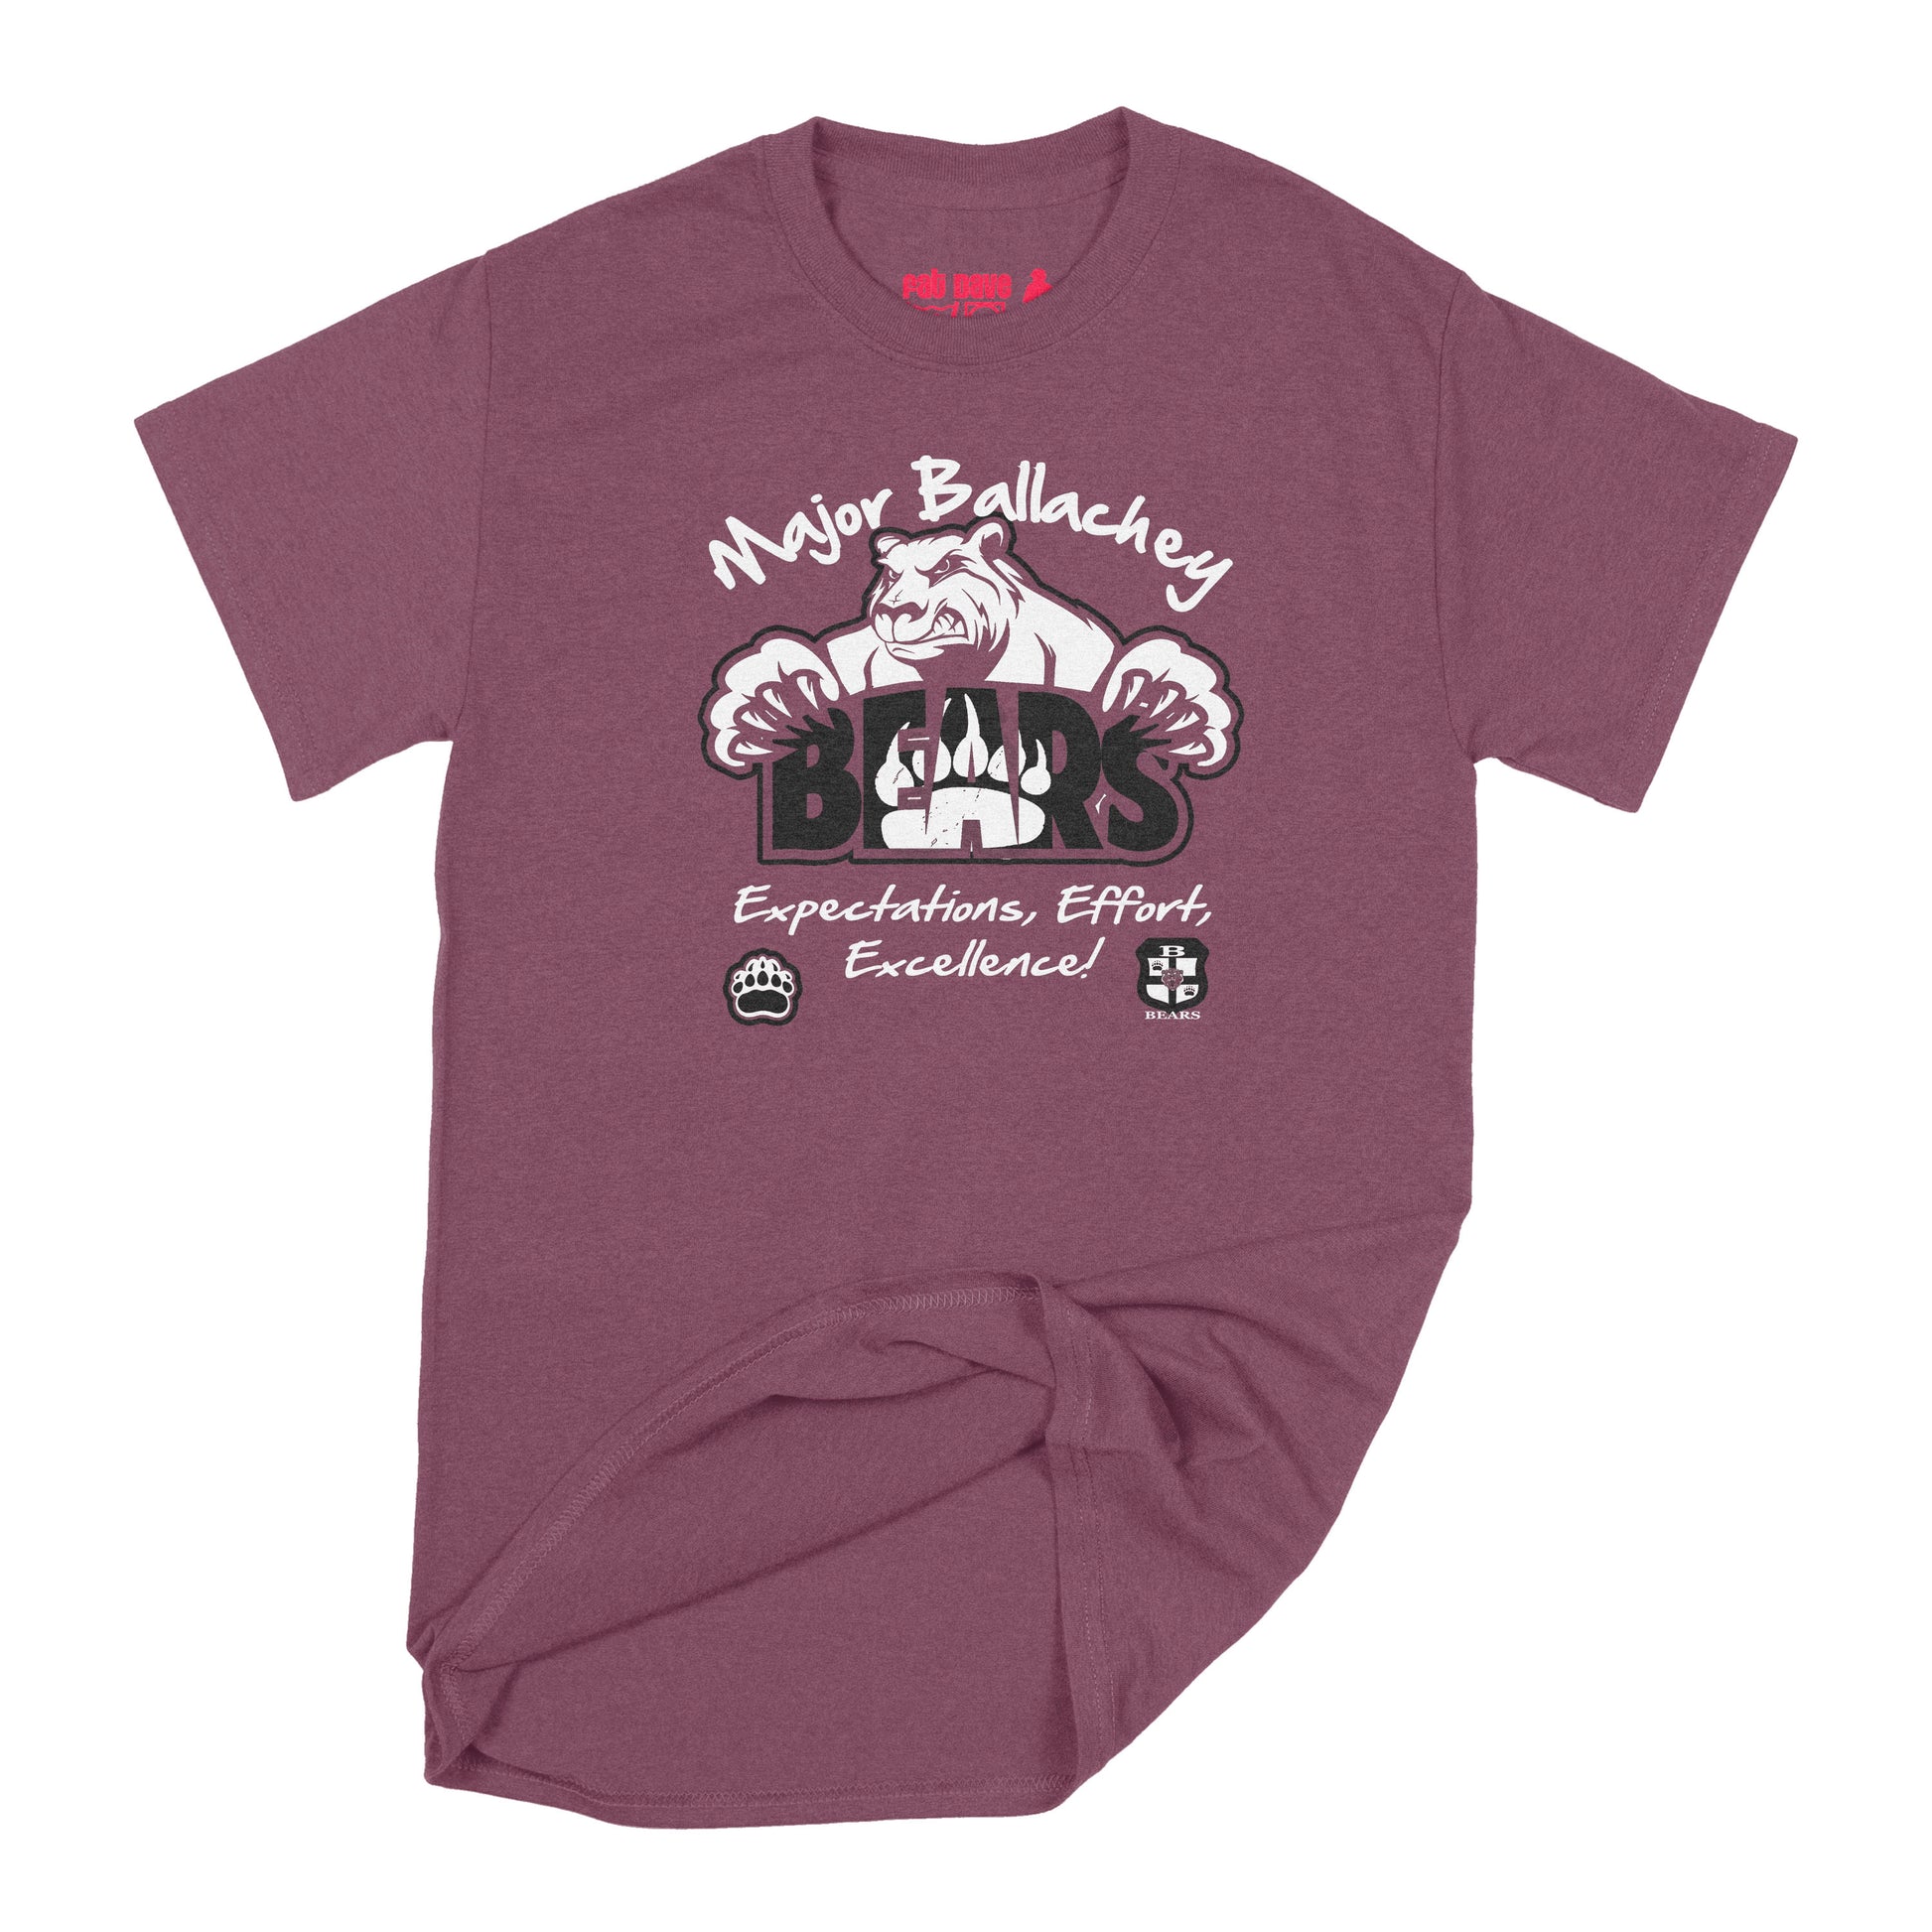 Major Ballachey Public School Bear T-Shirt Small Maroon